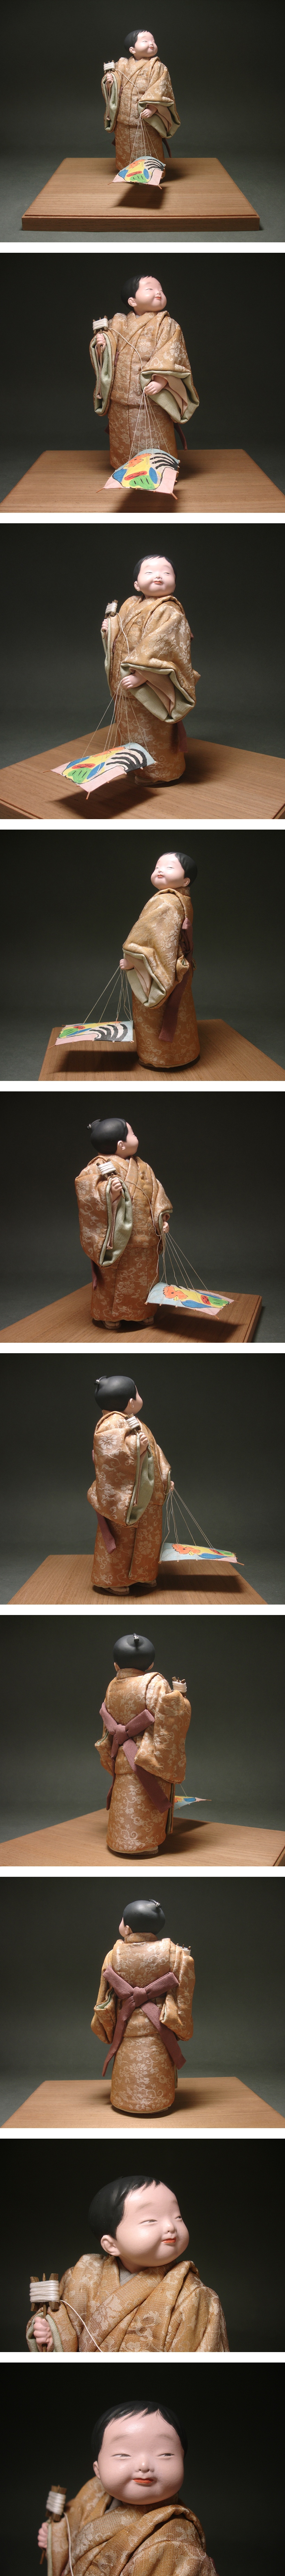 【超格安】慶應◆ 衣裳人形「凧上げ」 在銘 昭和30年代の制作 共箱付 その他